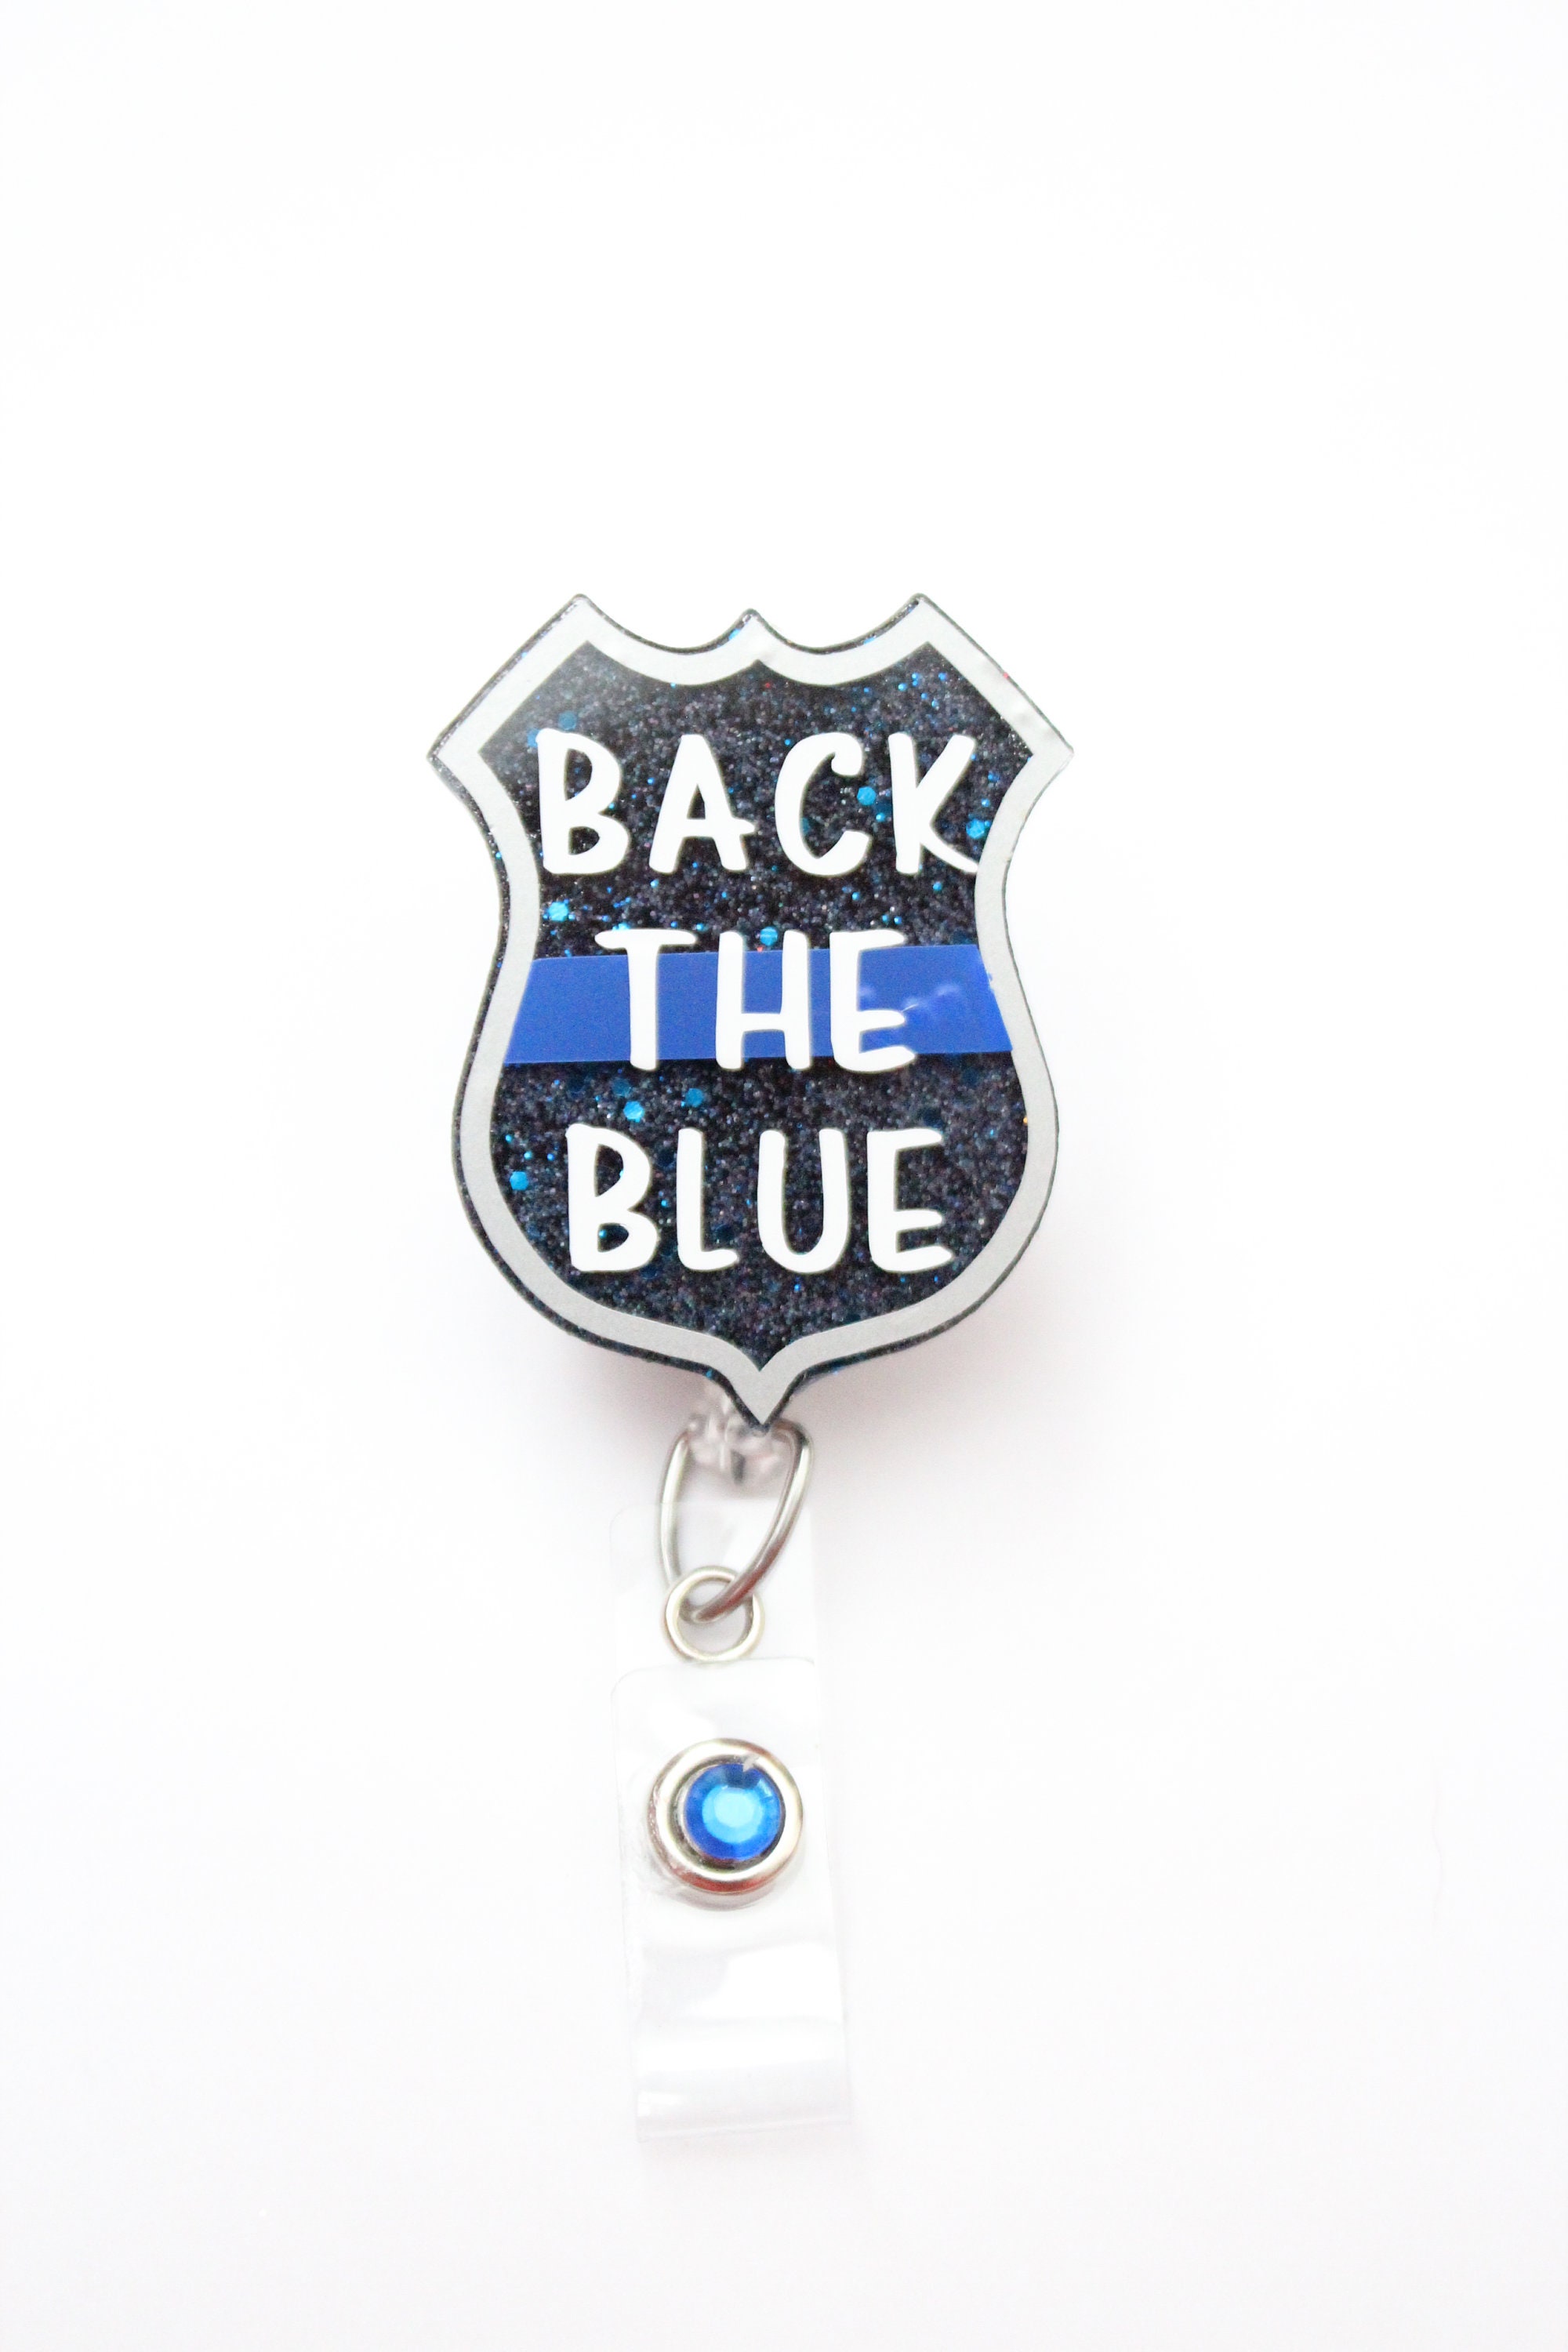 Police Badge Reel, Badge Reel, Back the Blue, Blue Line, Blue Line Badge  Reel